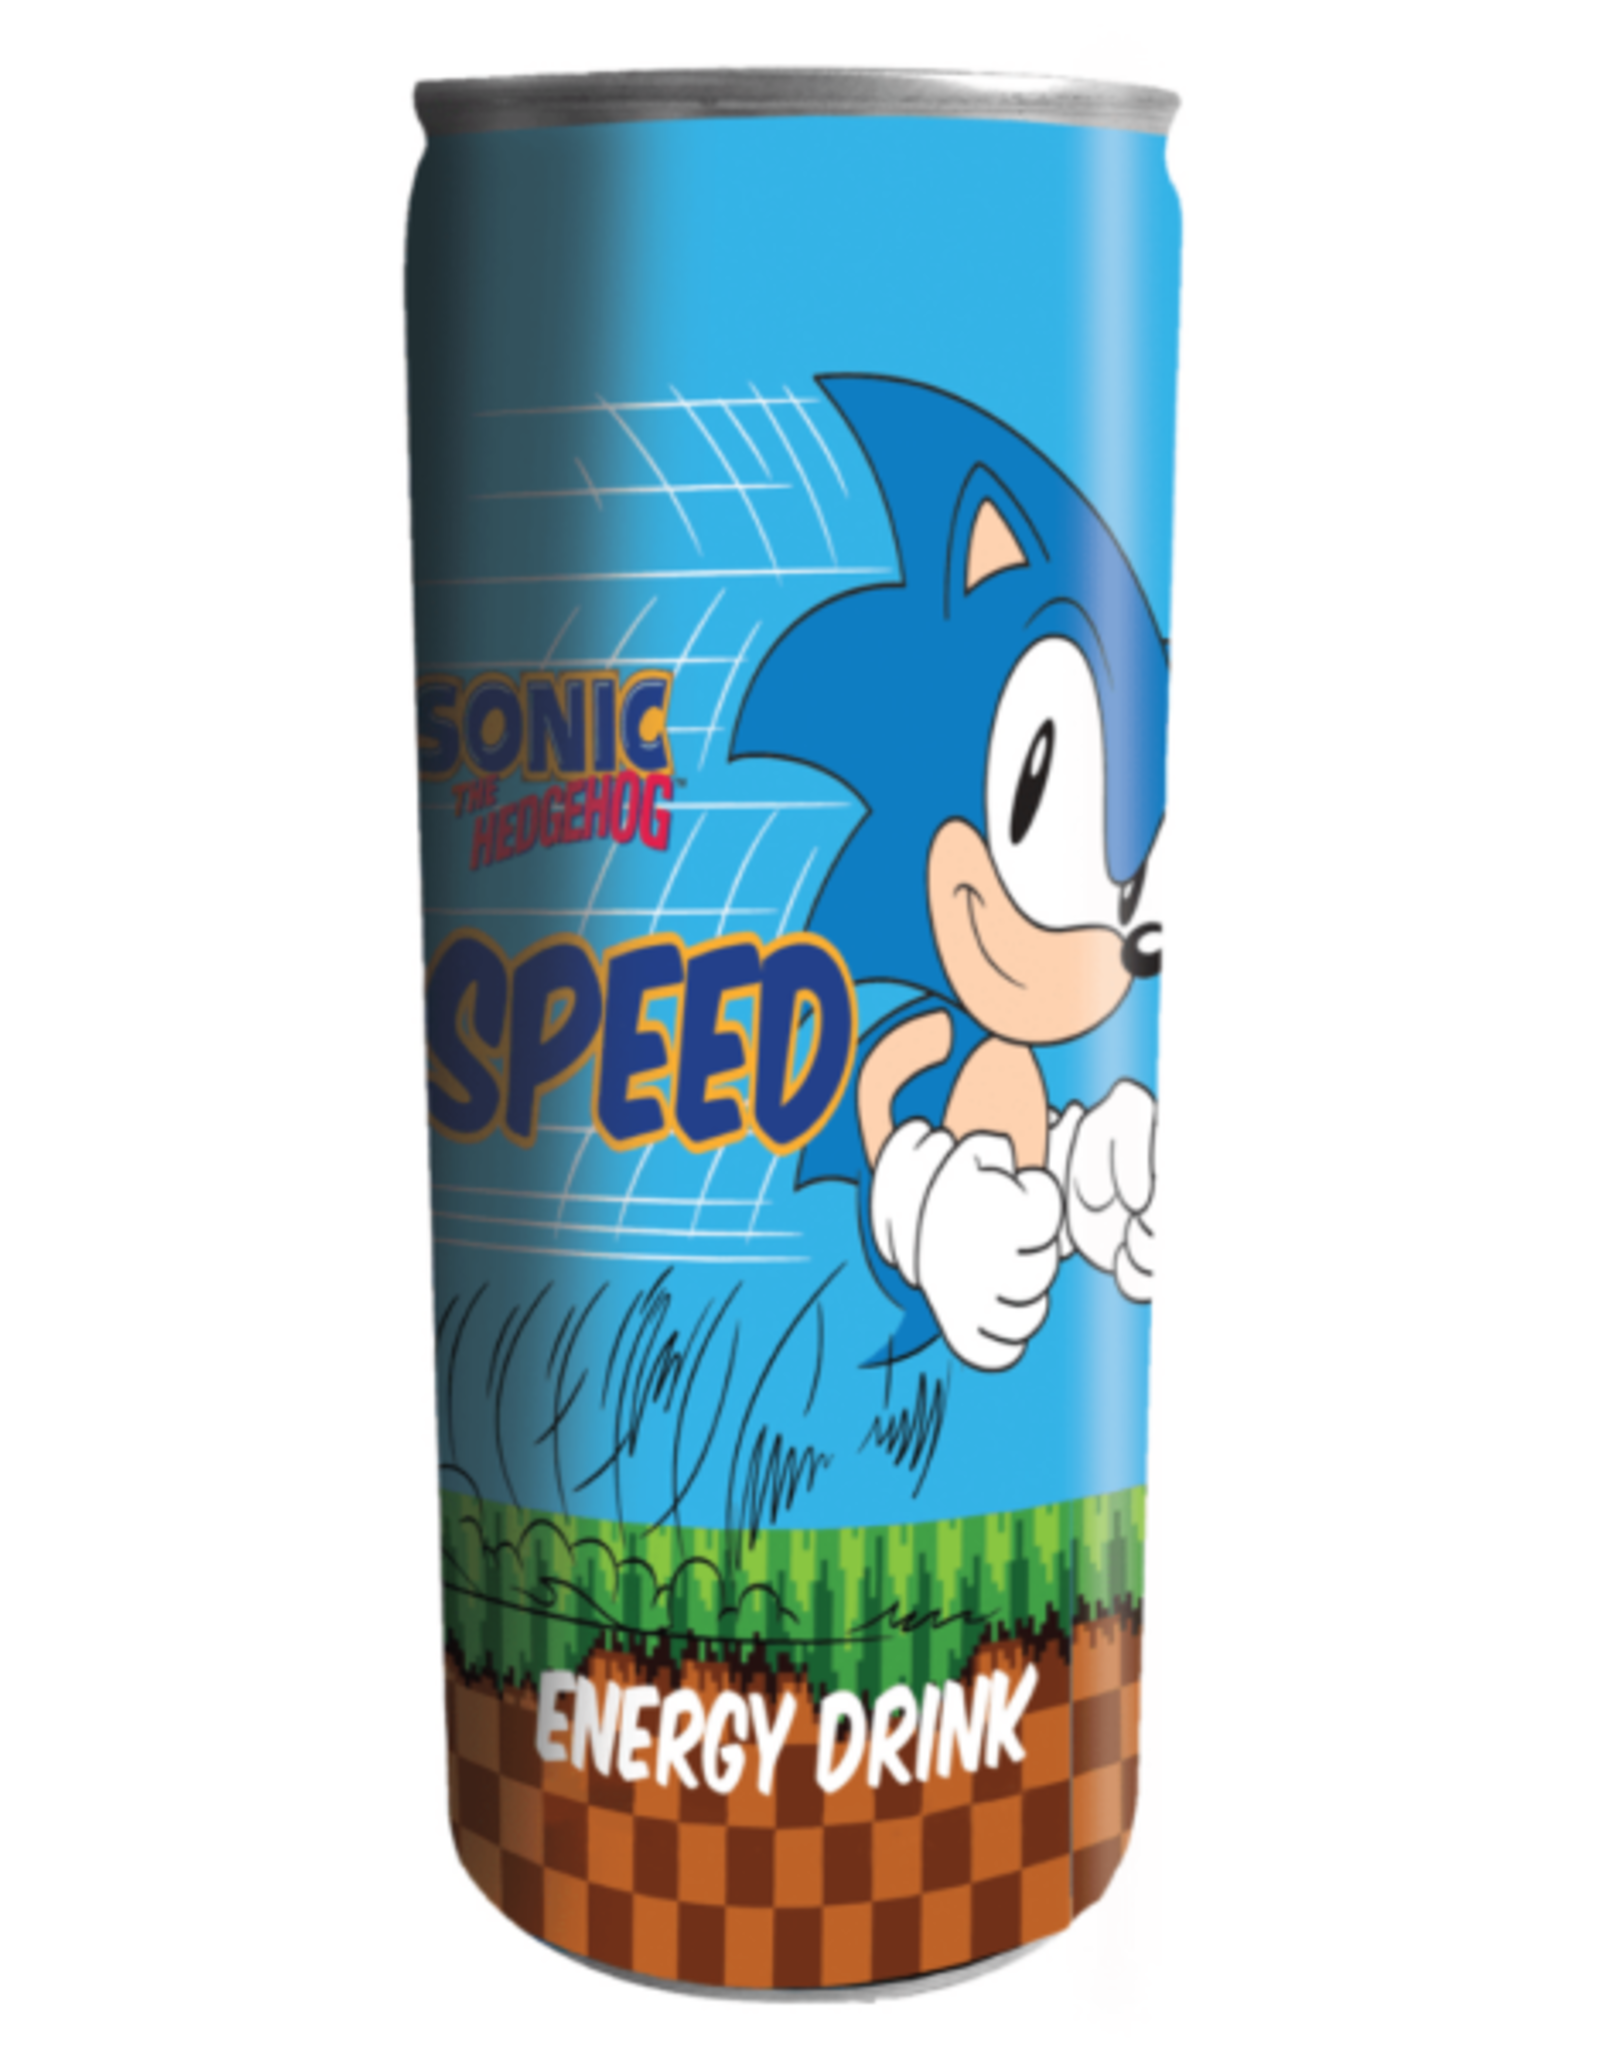 Boston America Energy Drink Sonic The Hedgehog Speed